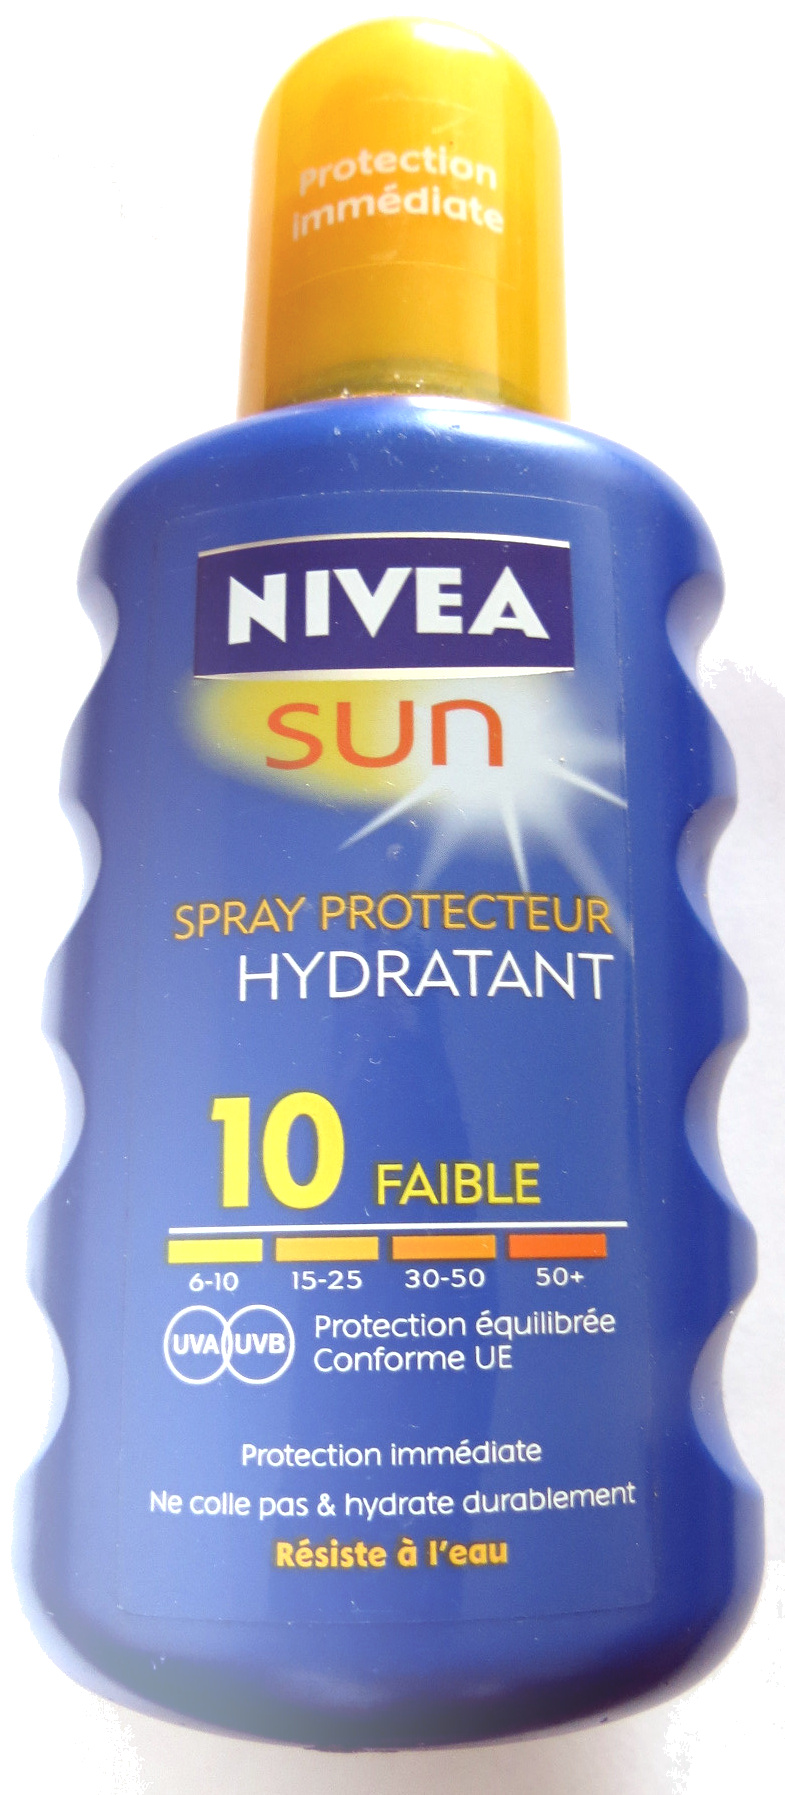 Spray protecteur hydratant 10 faible - Produit - fr